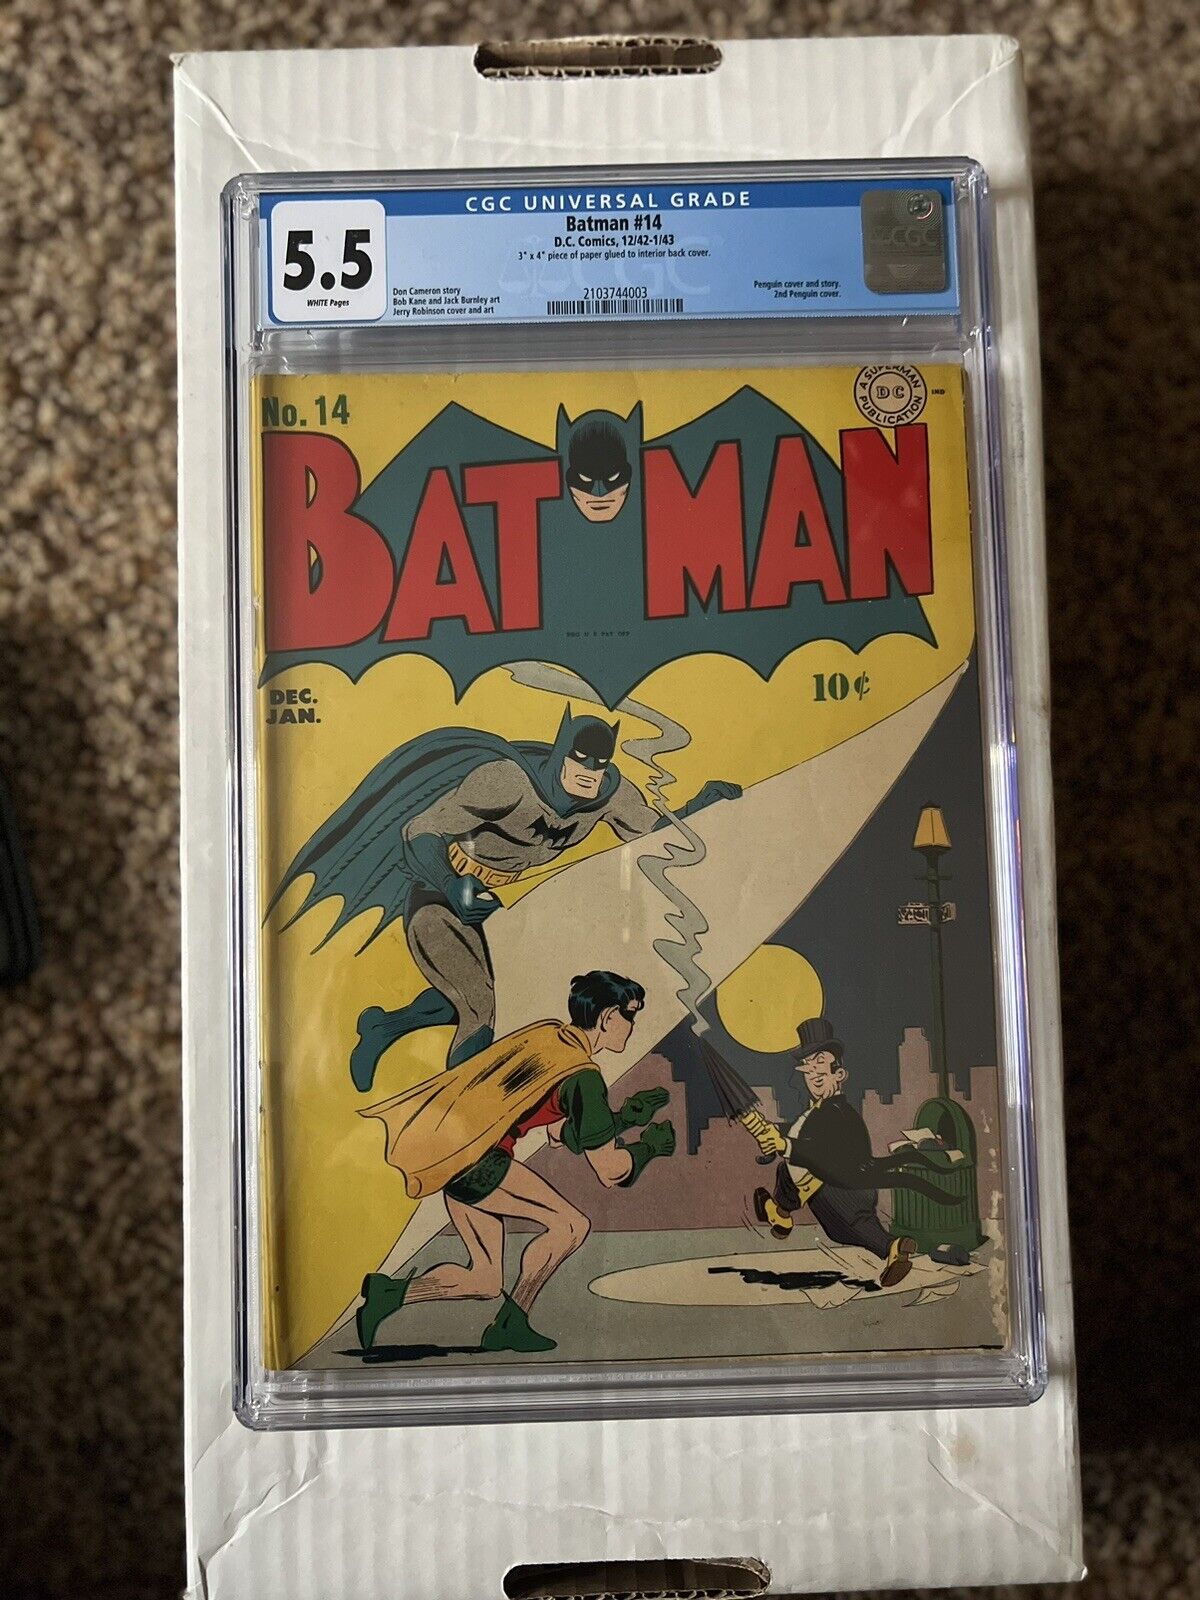 1942 / 1943 DC COMICS BATMAN #14 (CGC Universal Grade 5.5) 2nd Penguin Cover